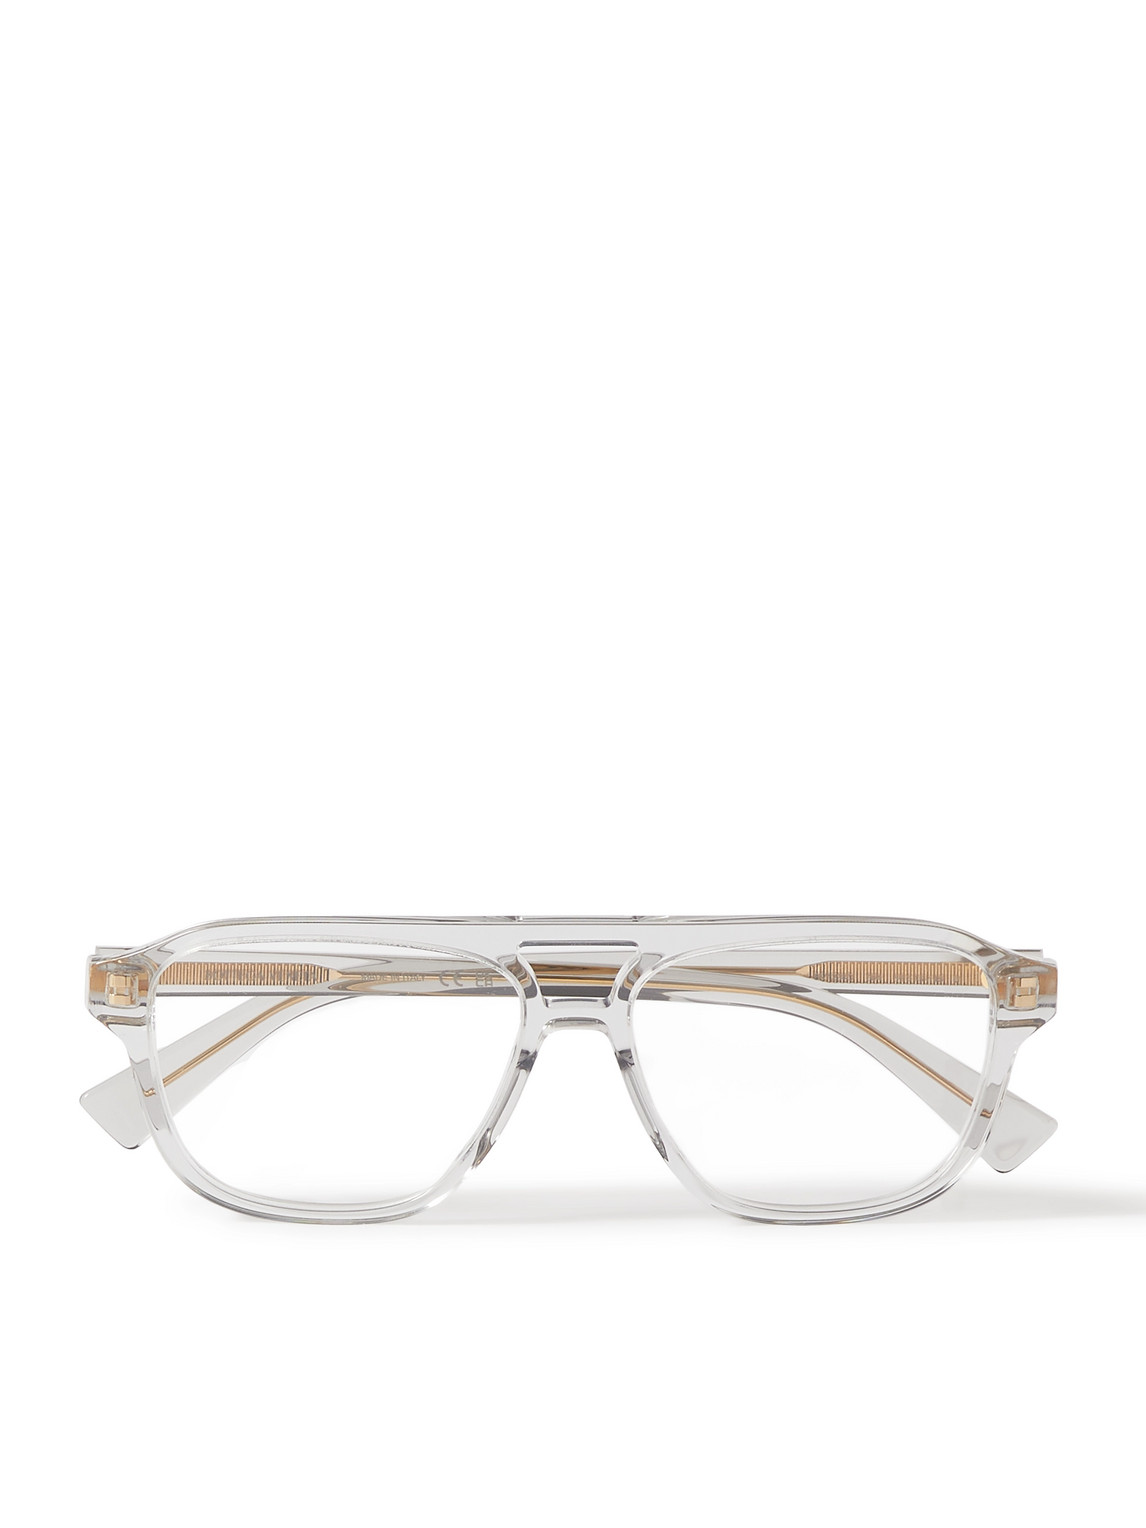 Aviator-Style Acetate Optical Glasses